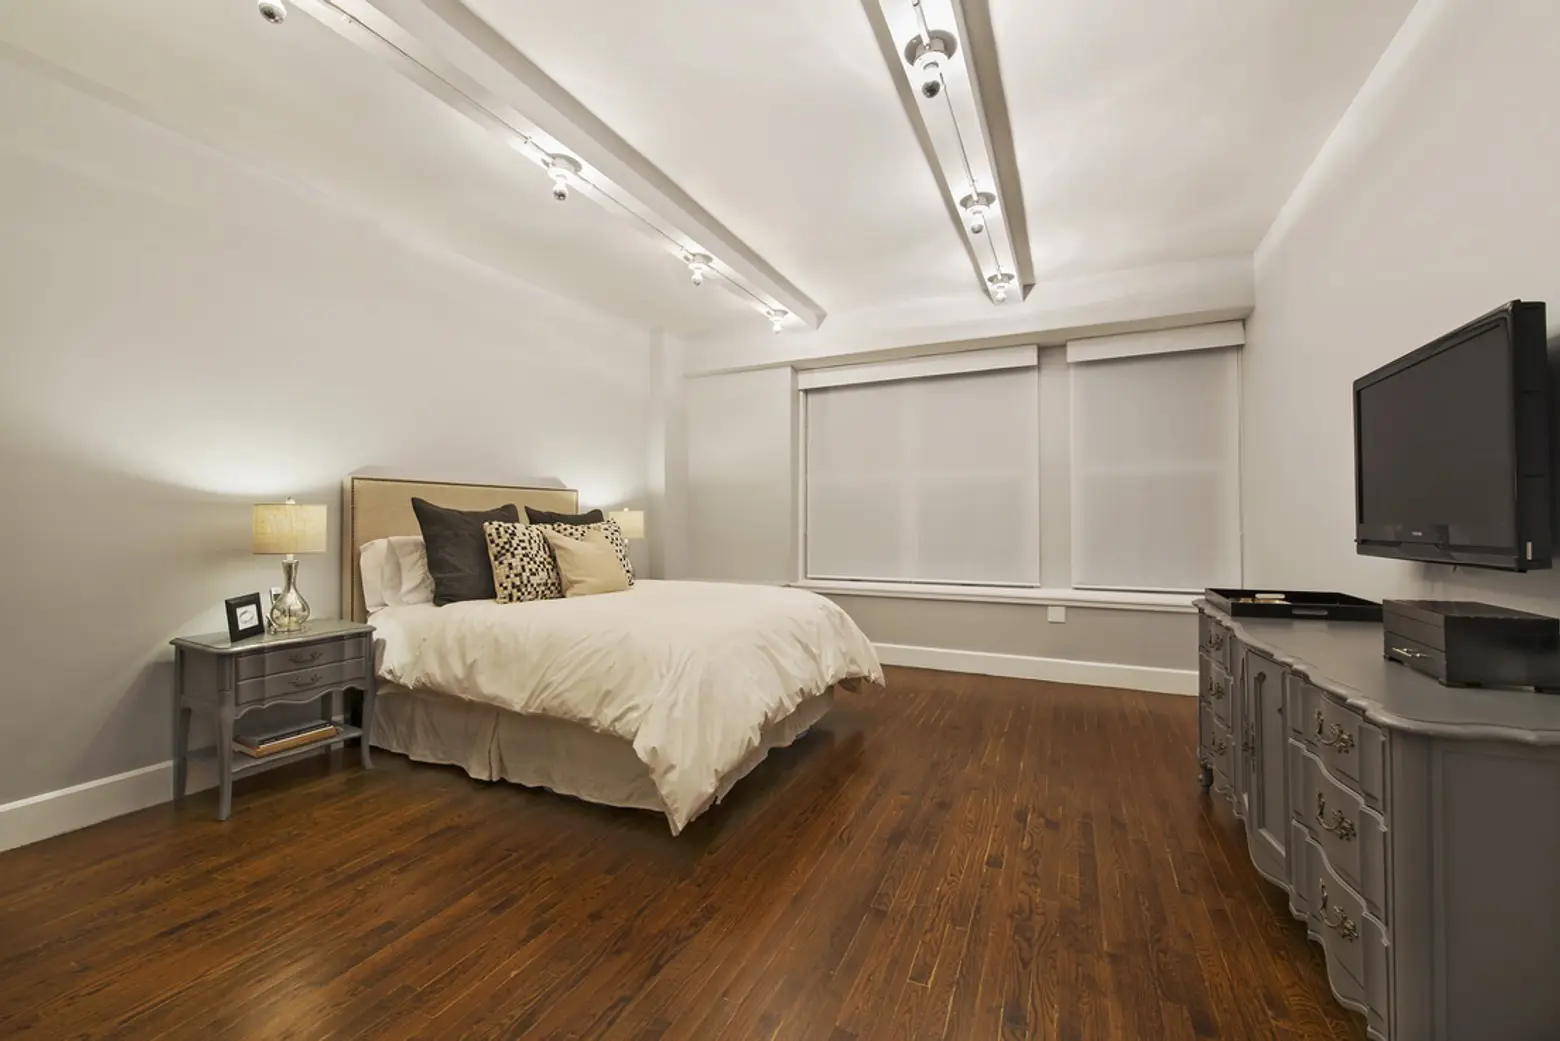 3 bedroom loft flatiron district,  real estate flat iron